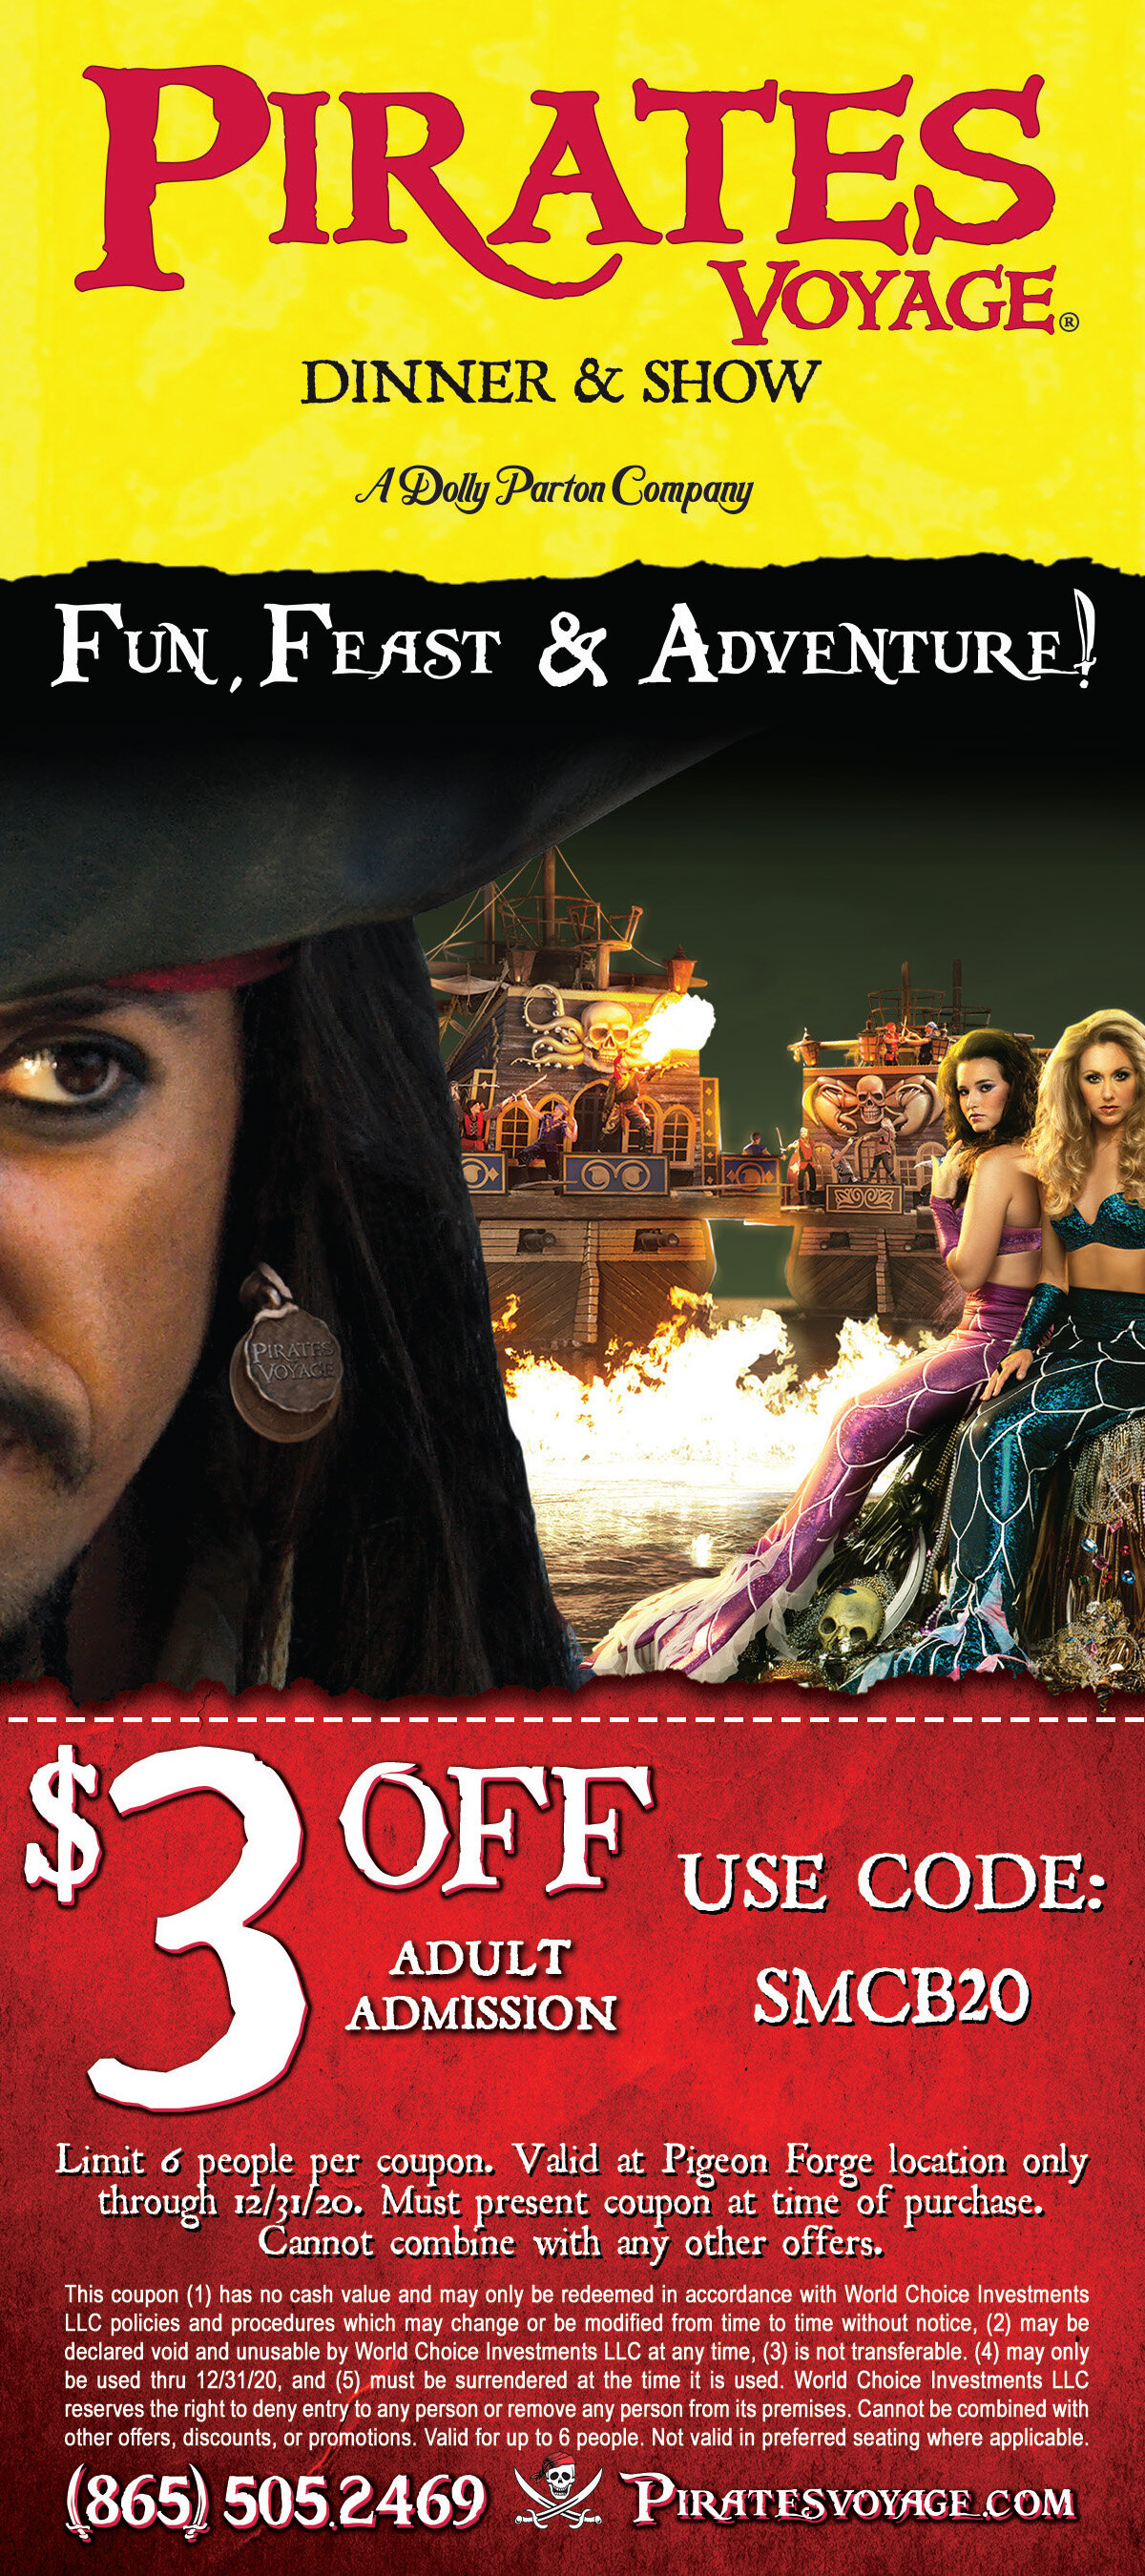 pirates voyage prices